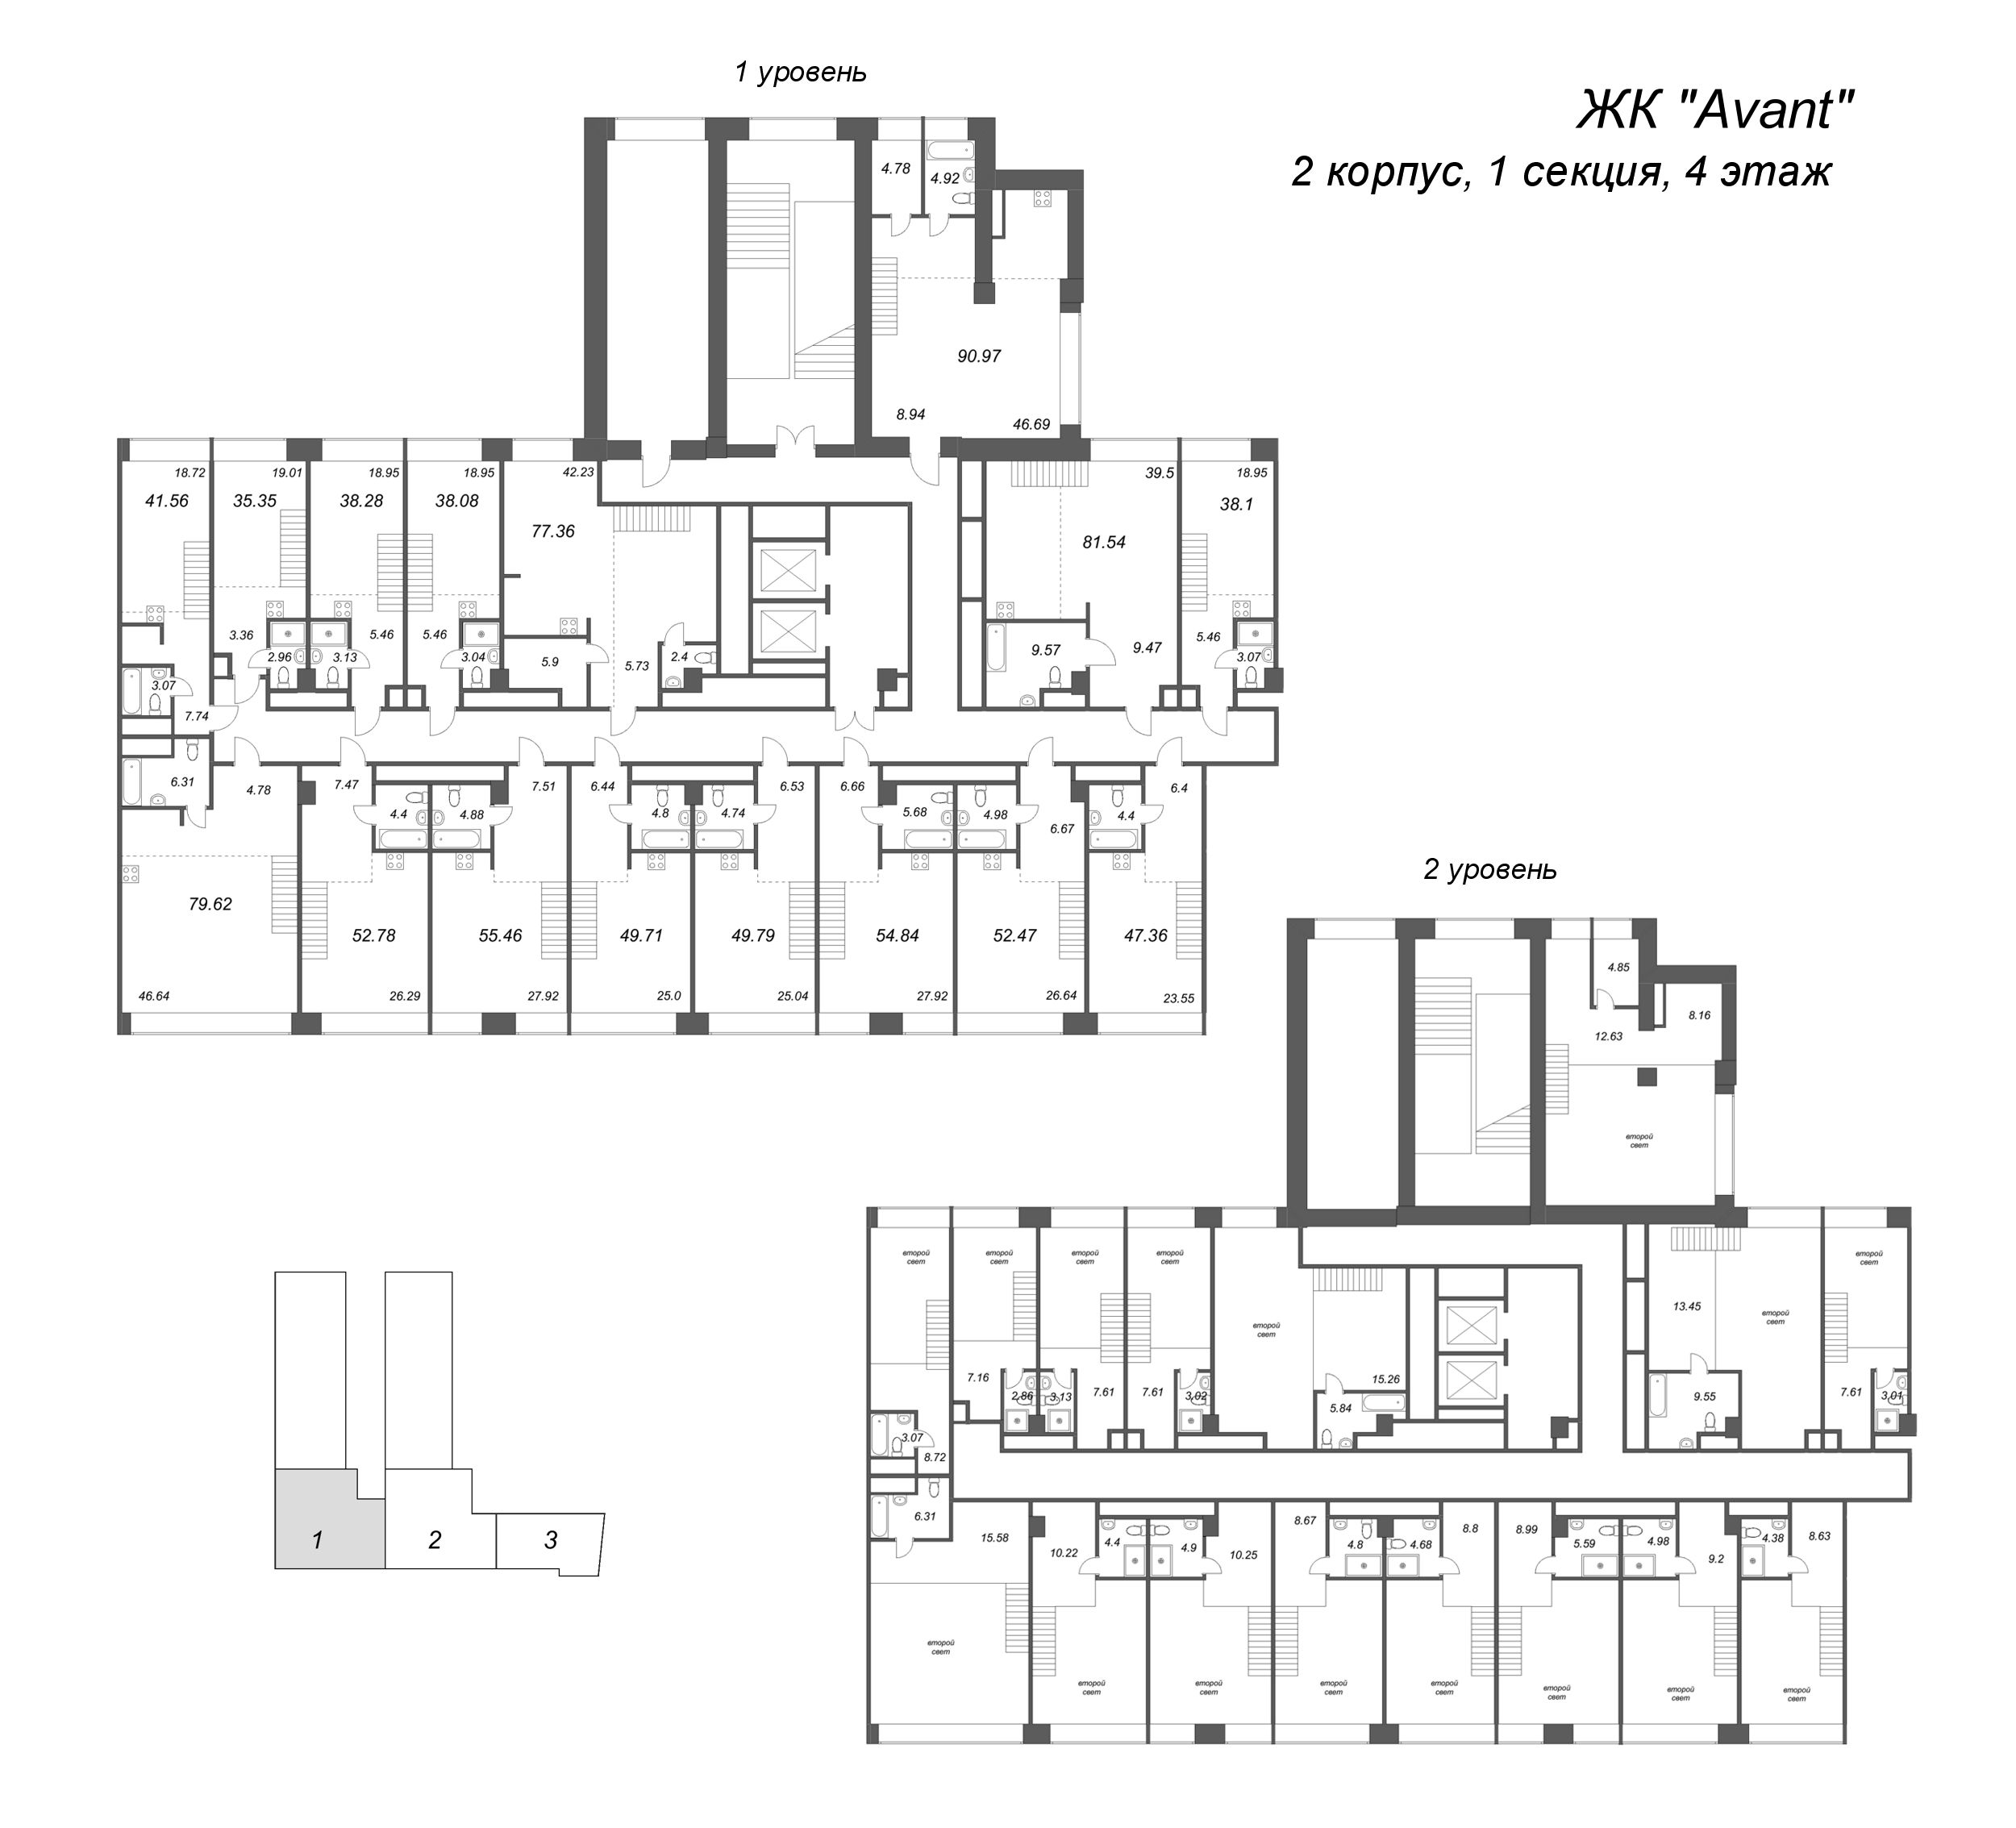 2-комнатная (Евро) квартира, 38.08 м² - планировка этажа